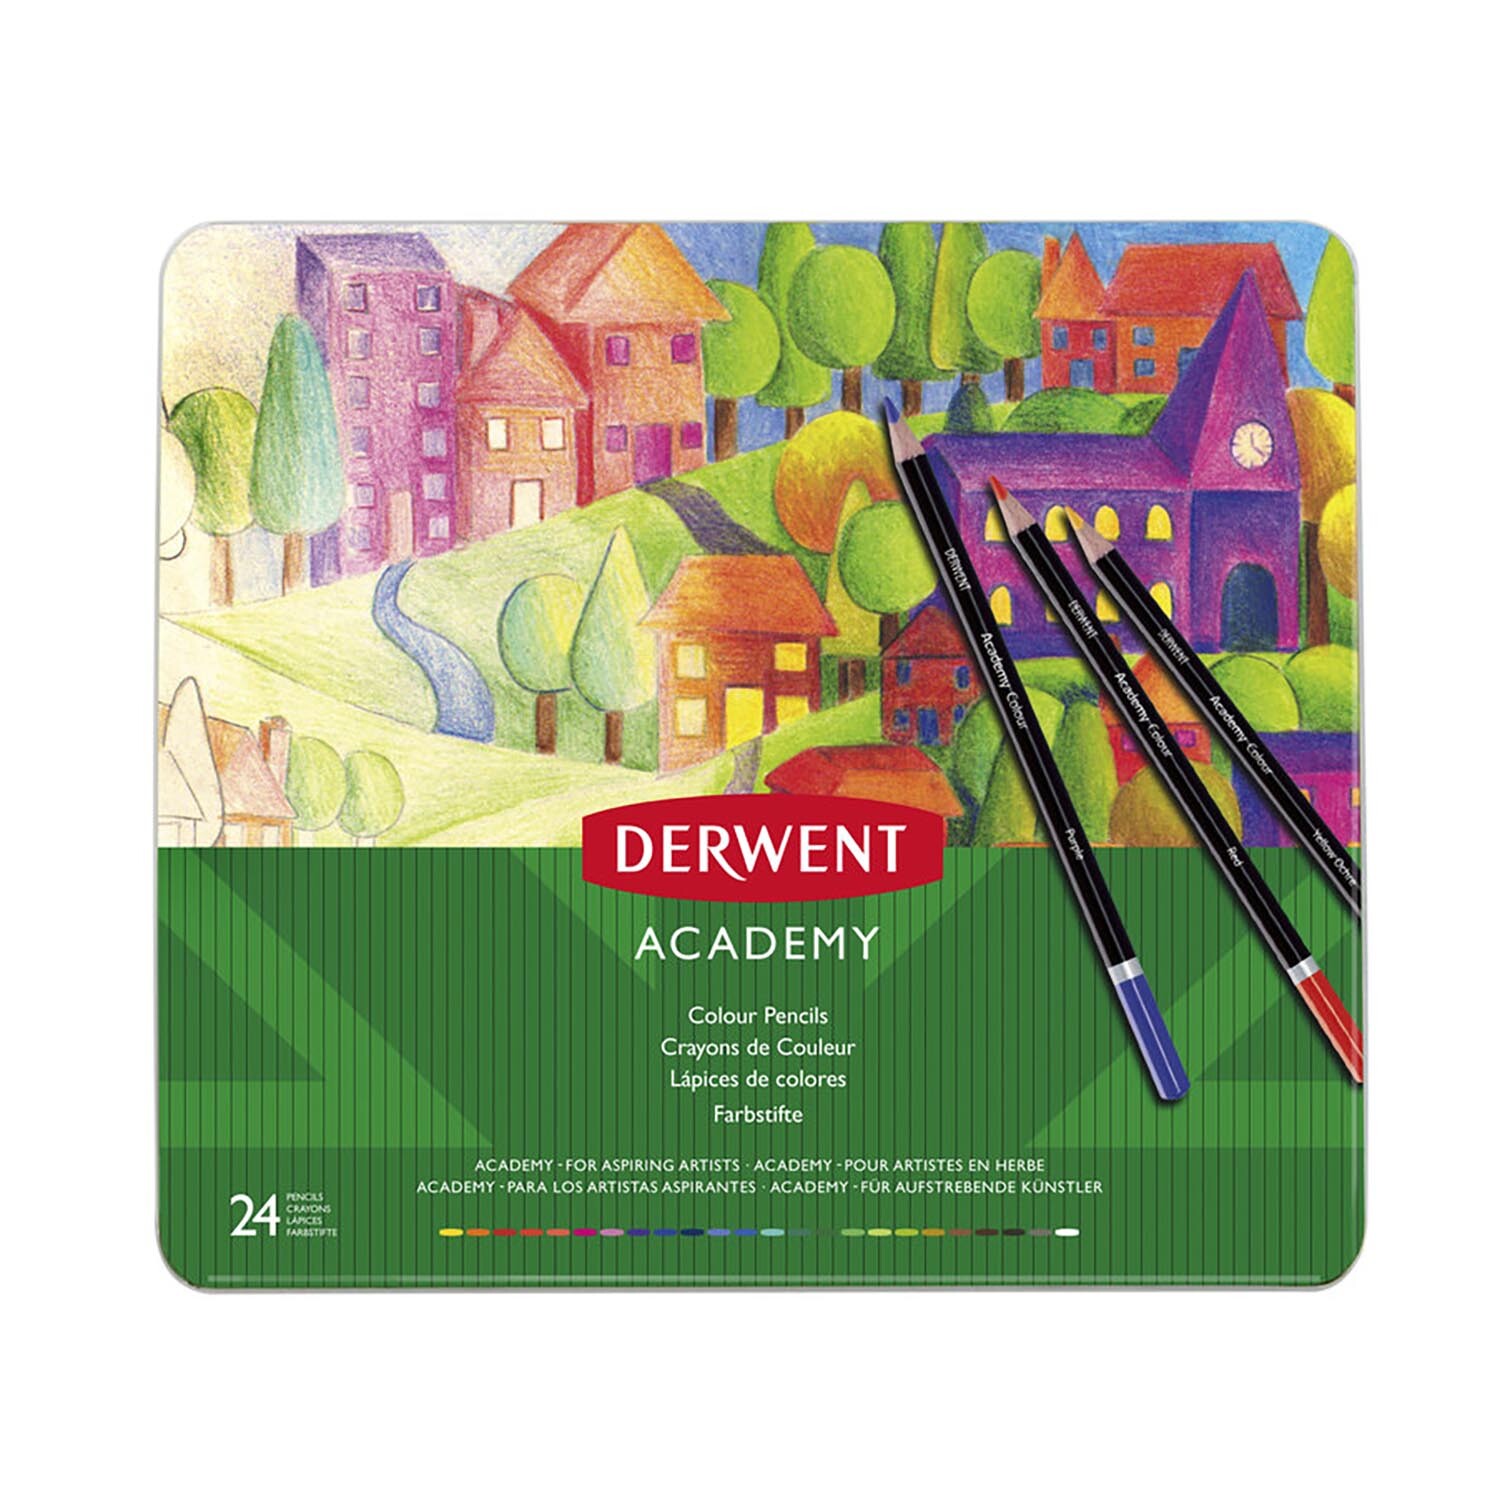 Derwent Academy Watercolour Pencils 24 Pack Image 6